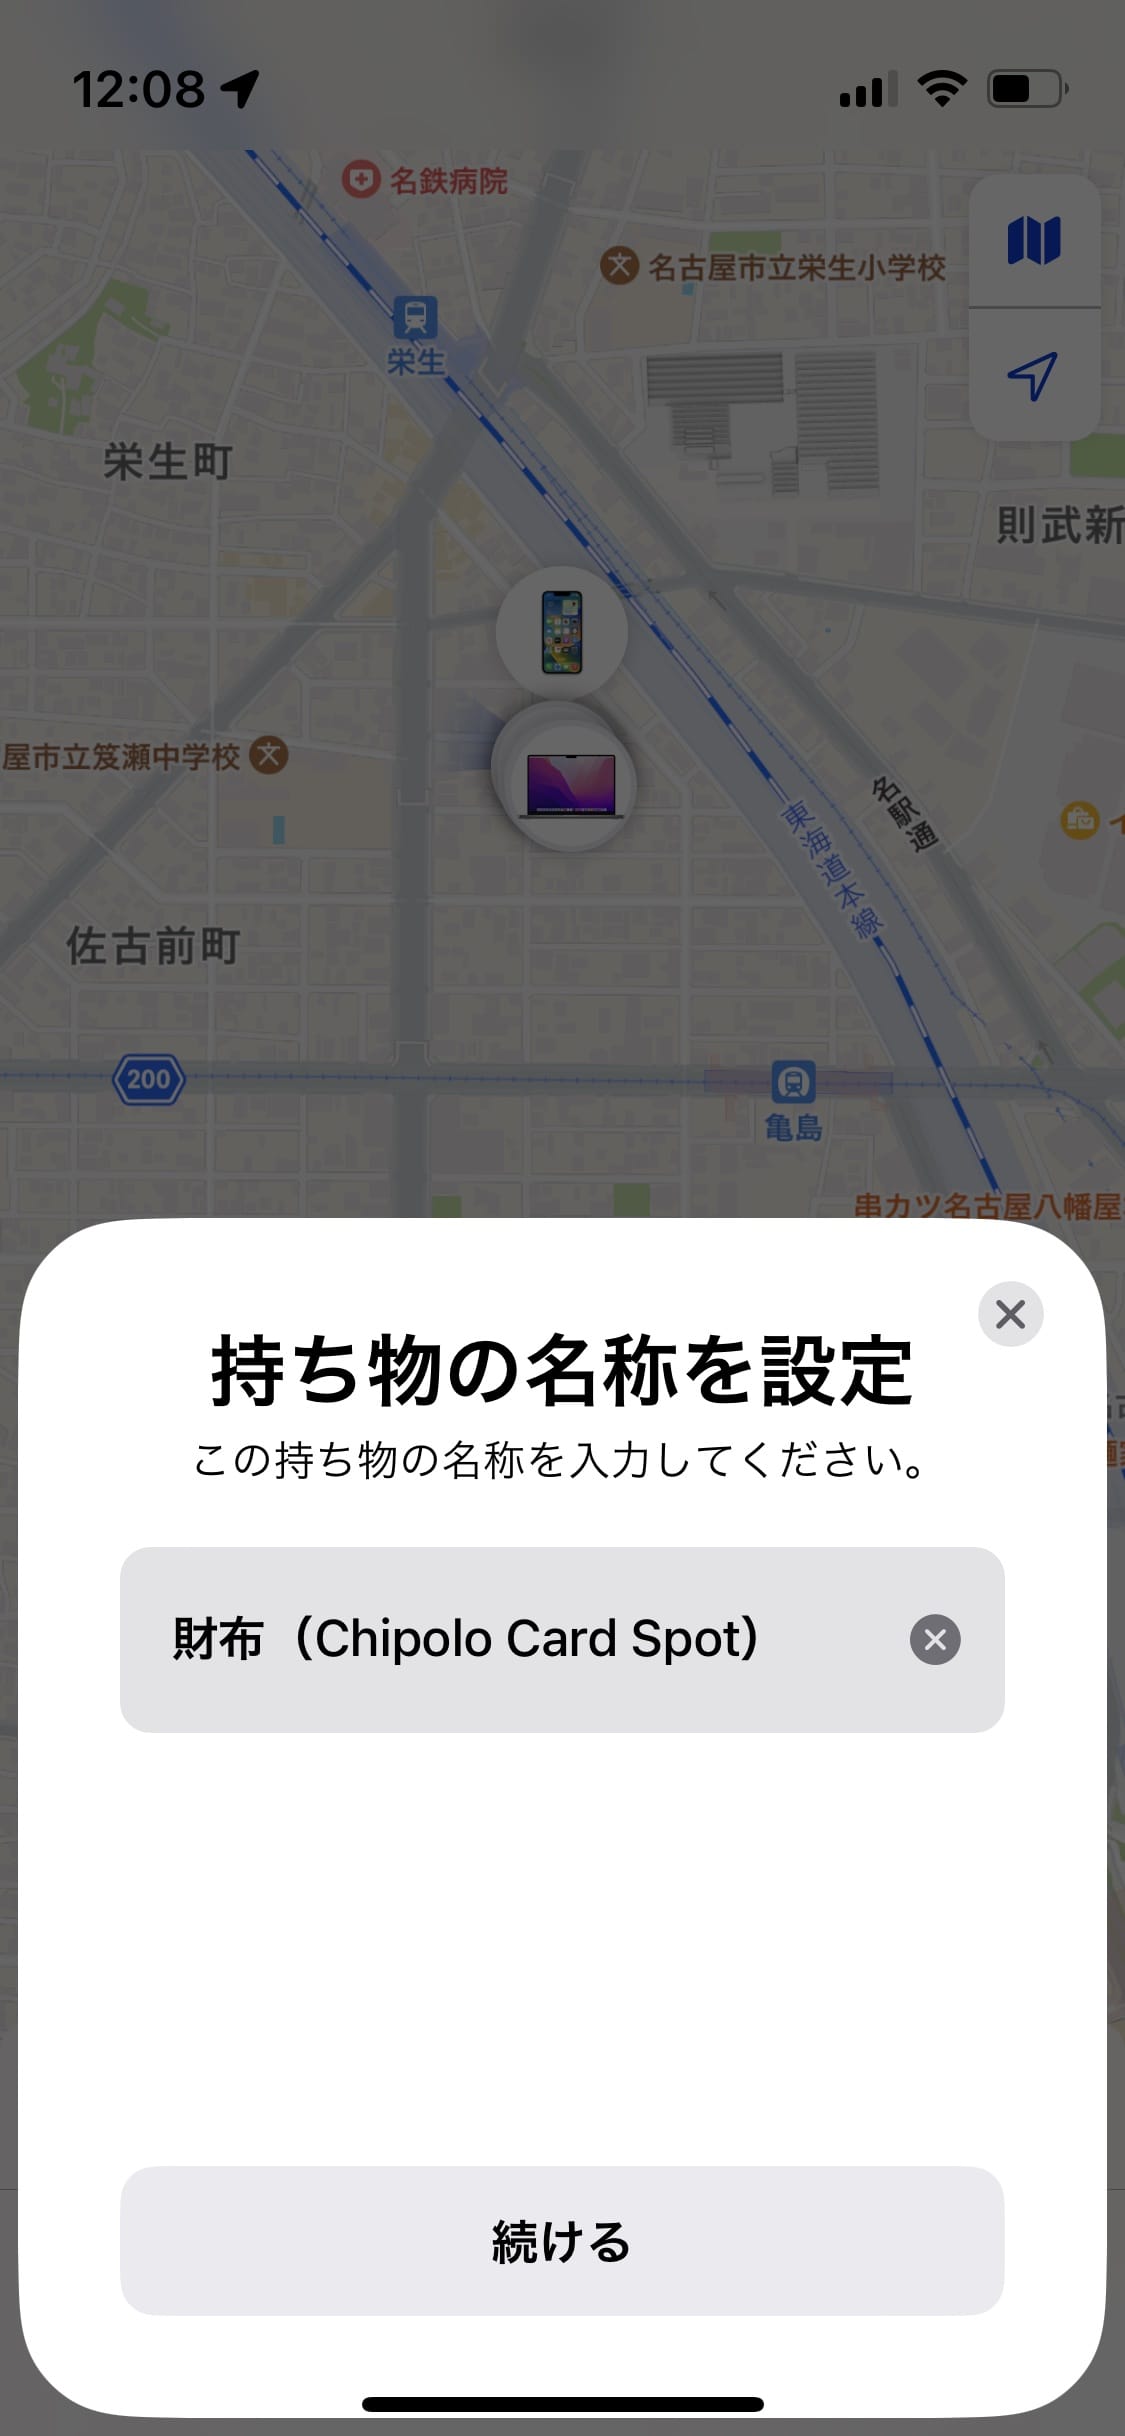 Chipolo Card Spotの設定方法